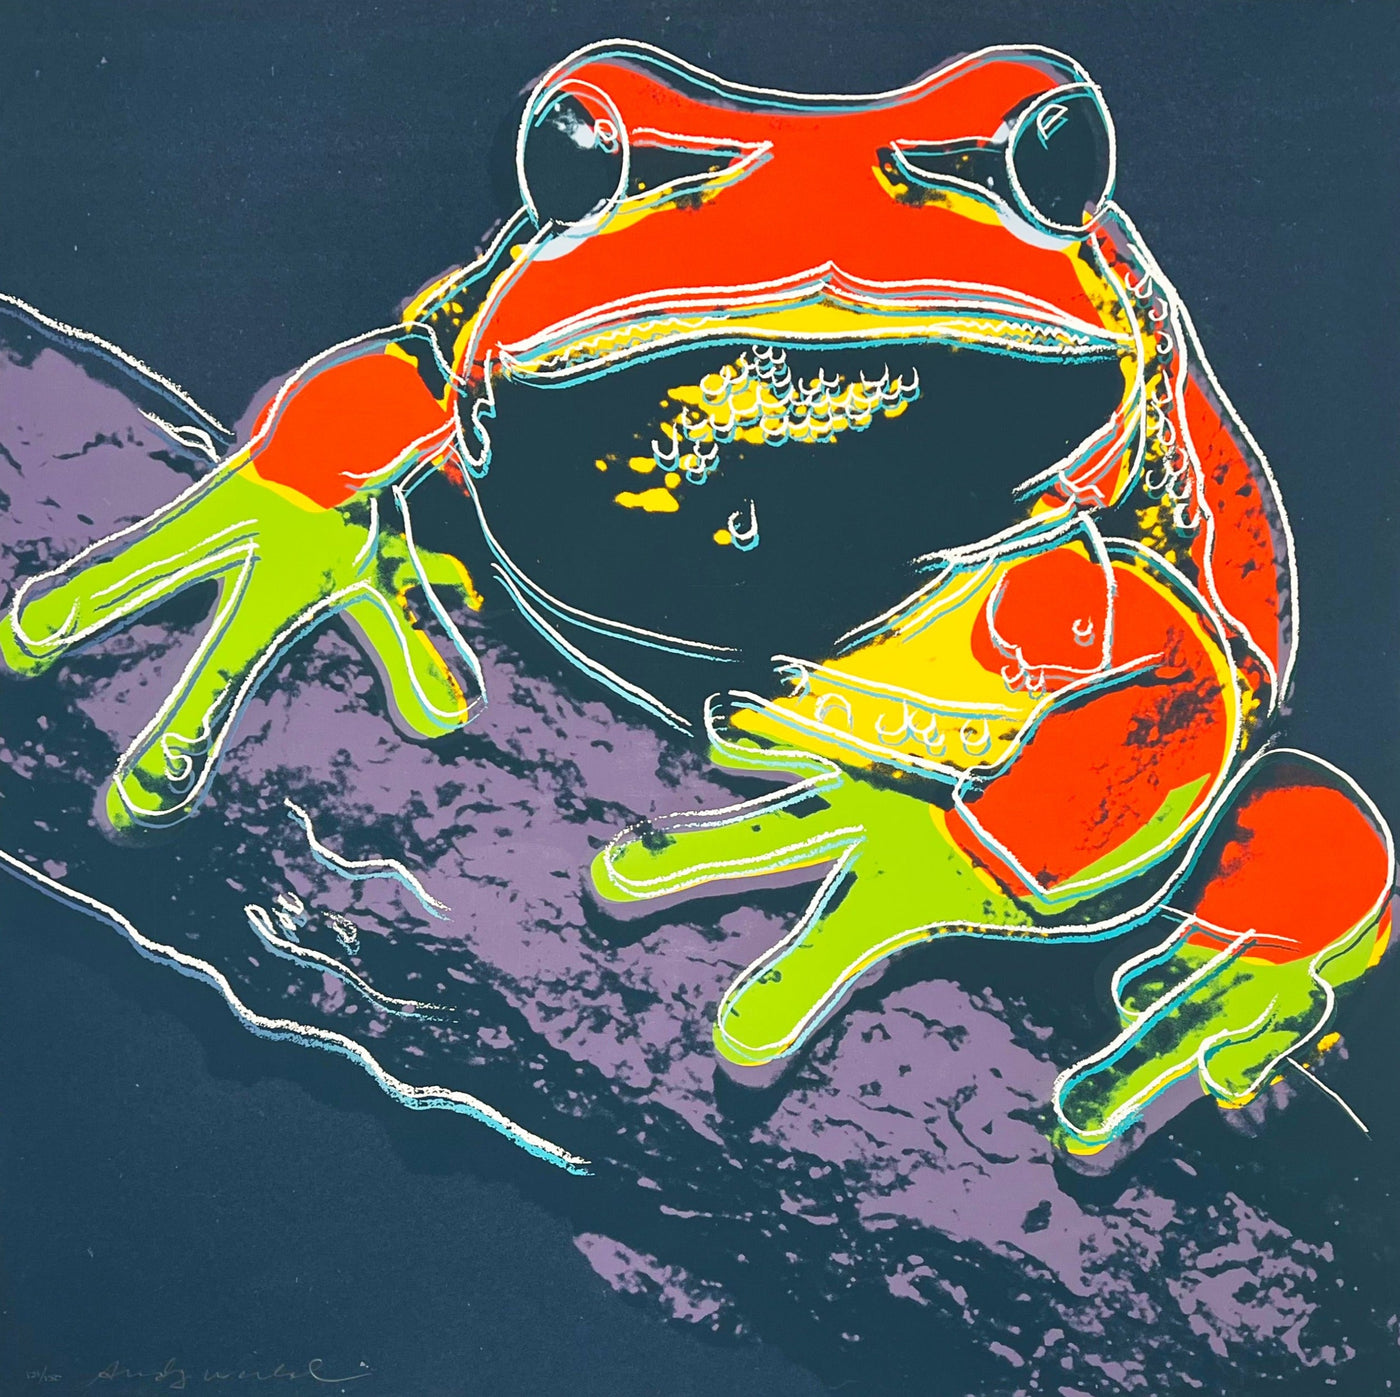 Andy Warhol Pine Barrens Tree Frog (Feldman II.294) 1983